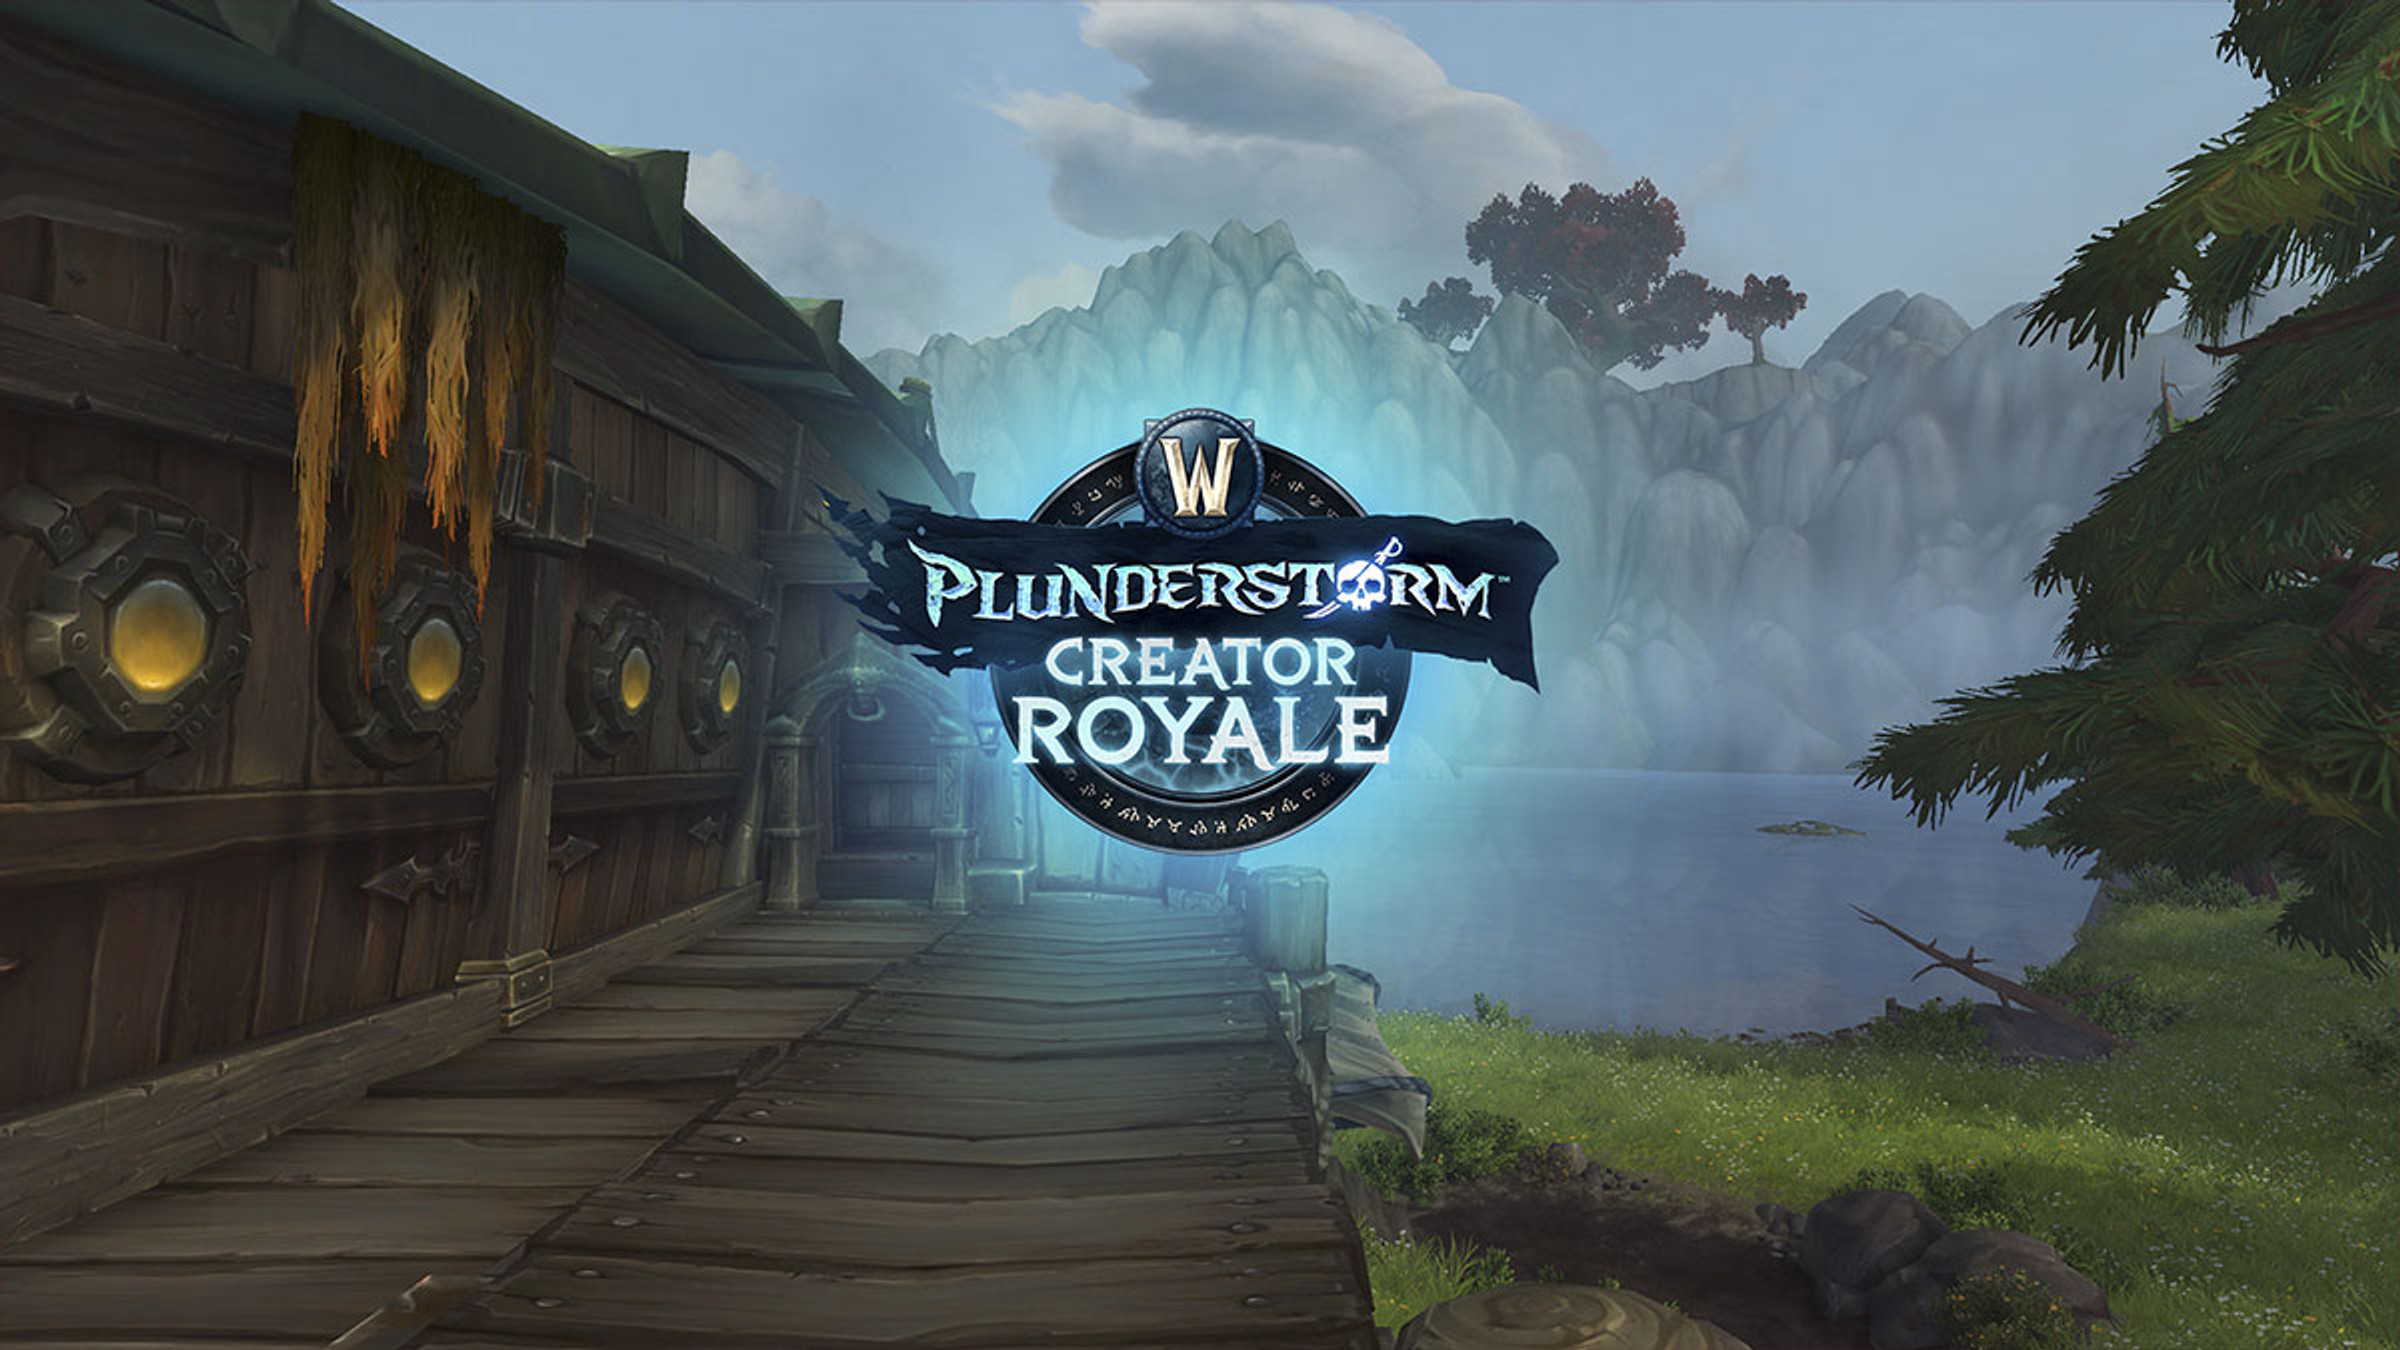 plunderstorm-wow-tournoi-creator-royale-battle-info-date